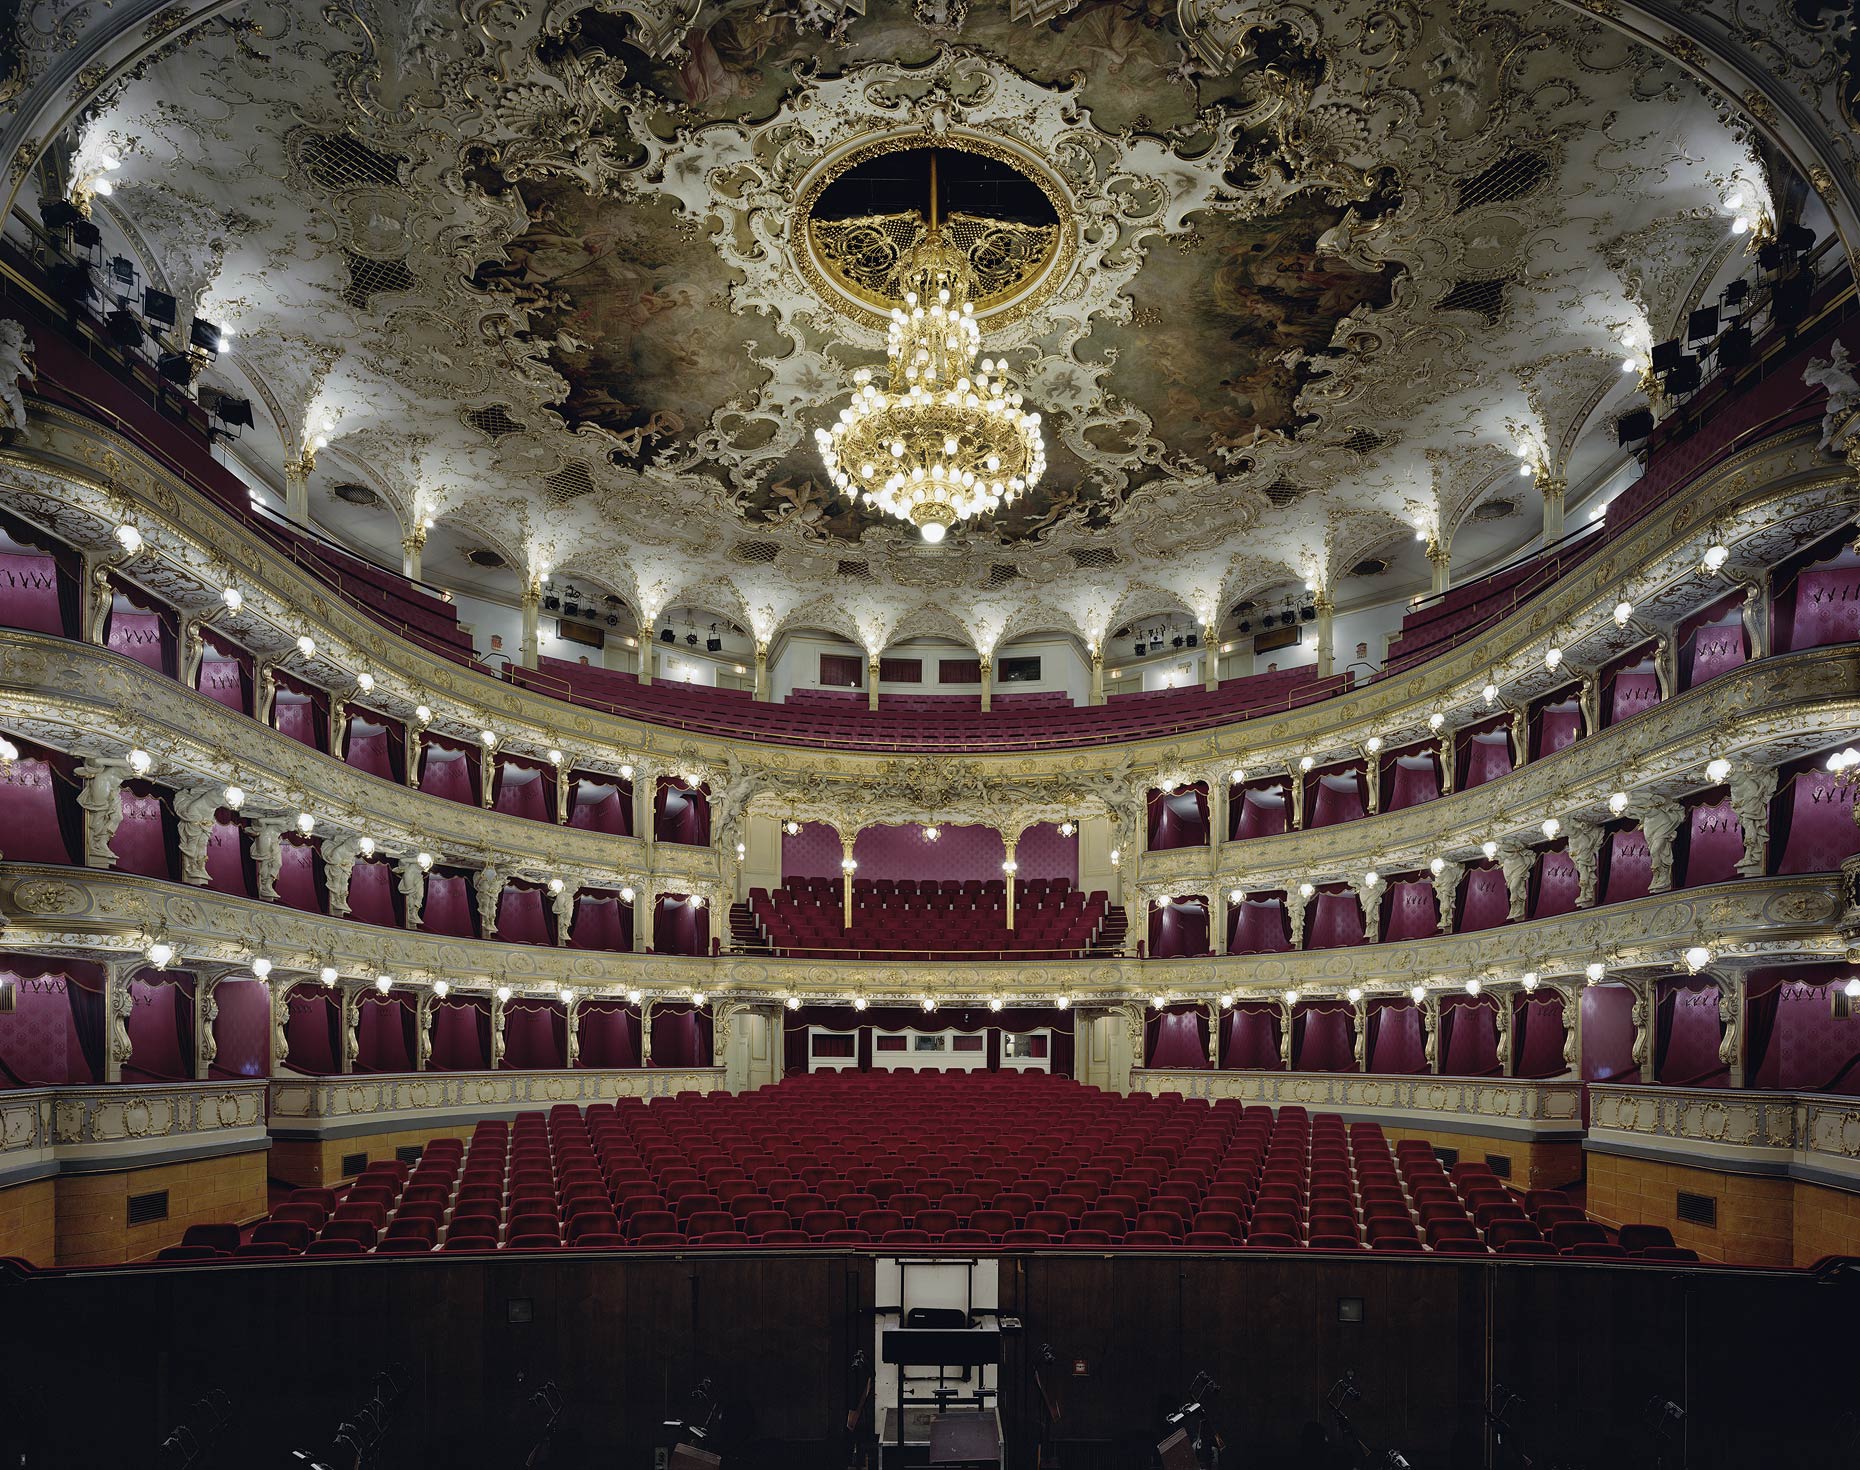 Statni Opera, Prague, Czech Republic, 2008